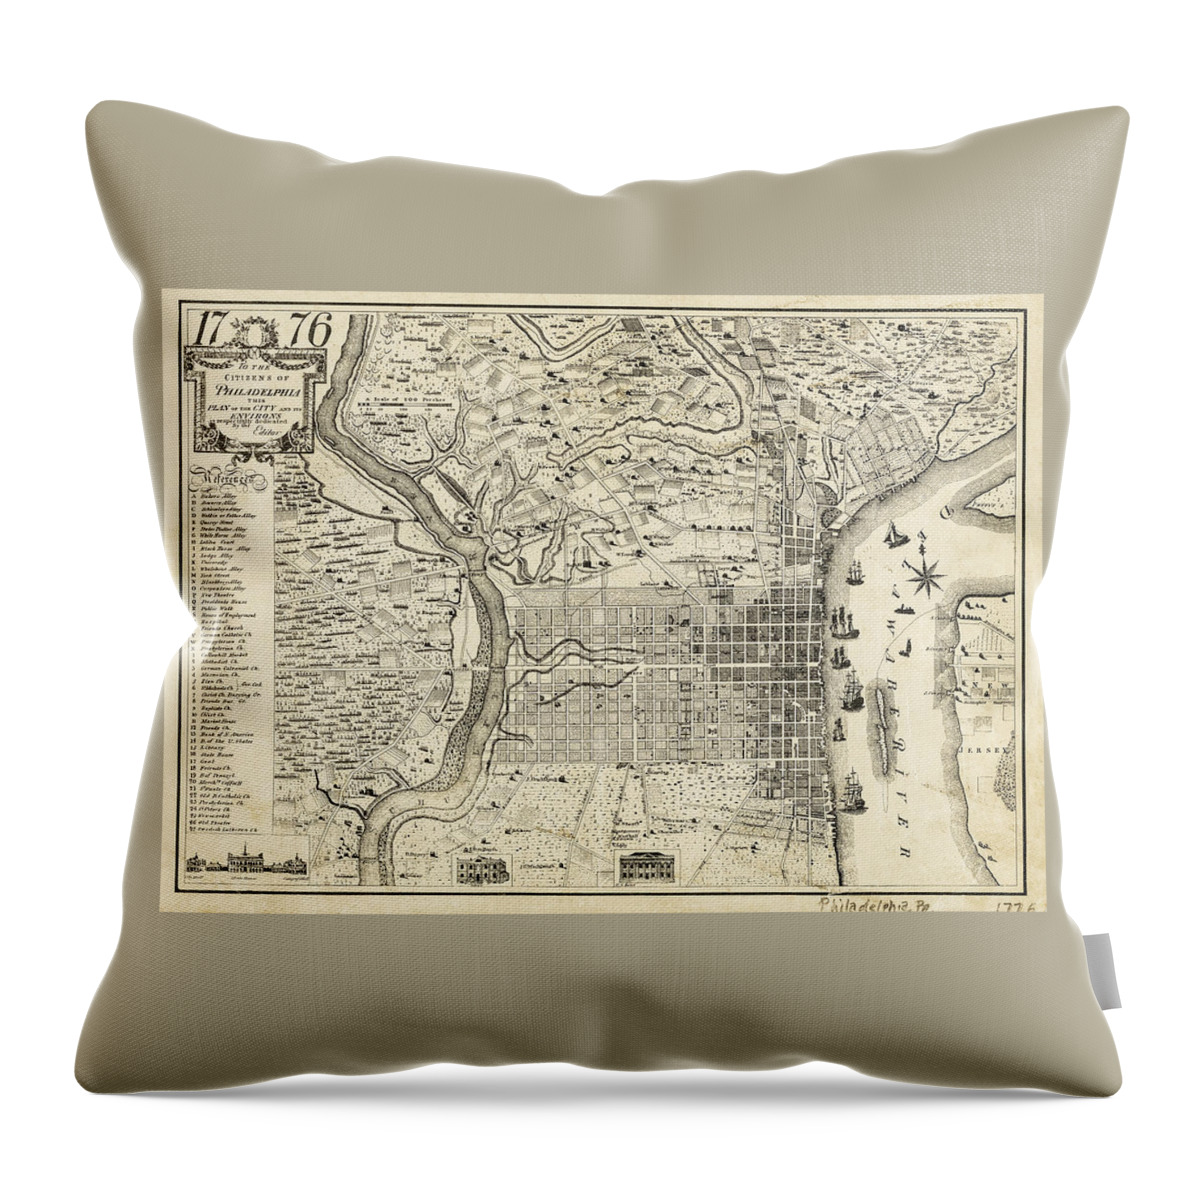 Philadelphia Throw Pillow featuring the photograph Vintage Map of Philadelphia Pennsylvania 1776 by Carol Japp